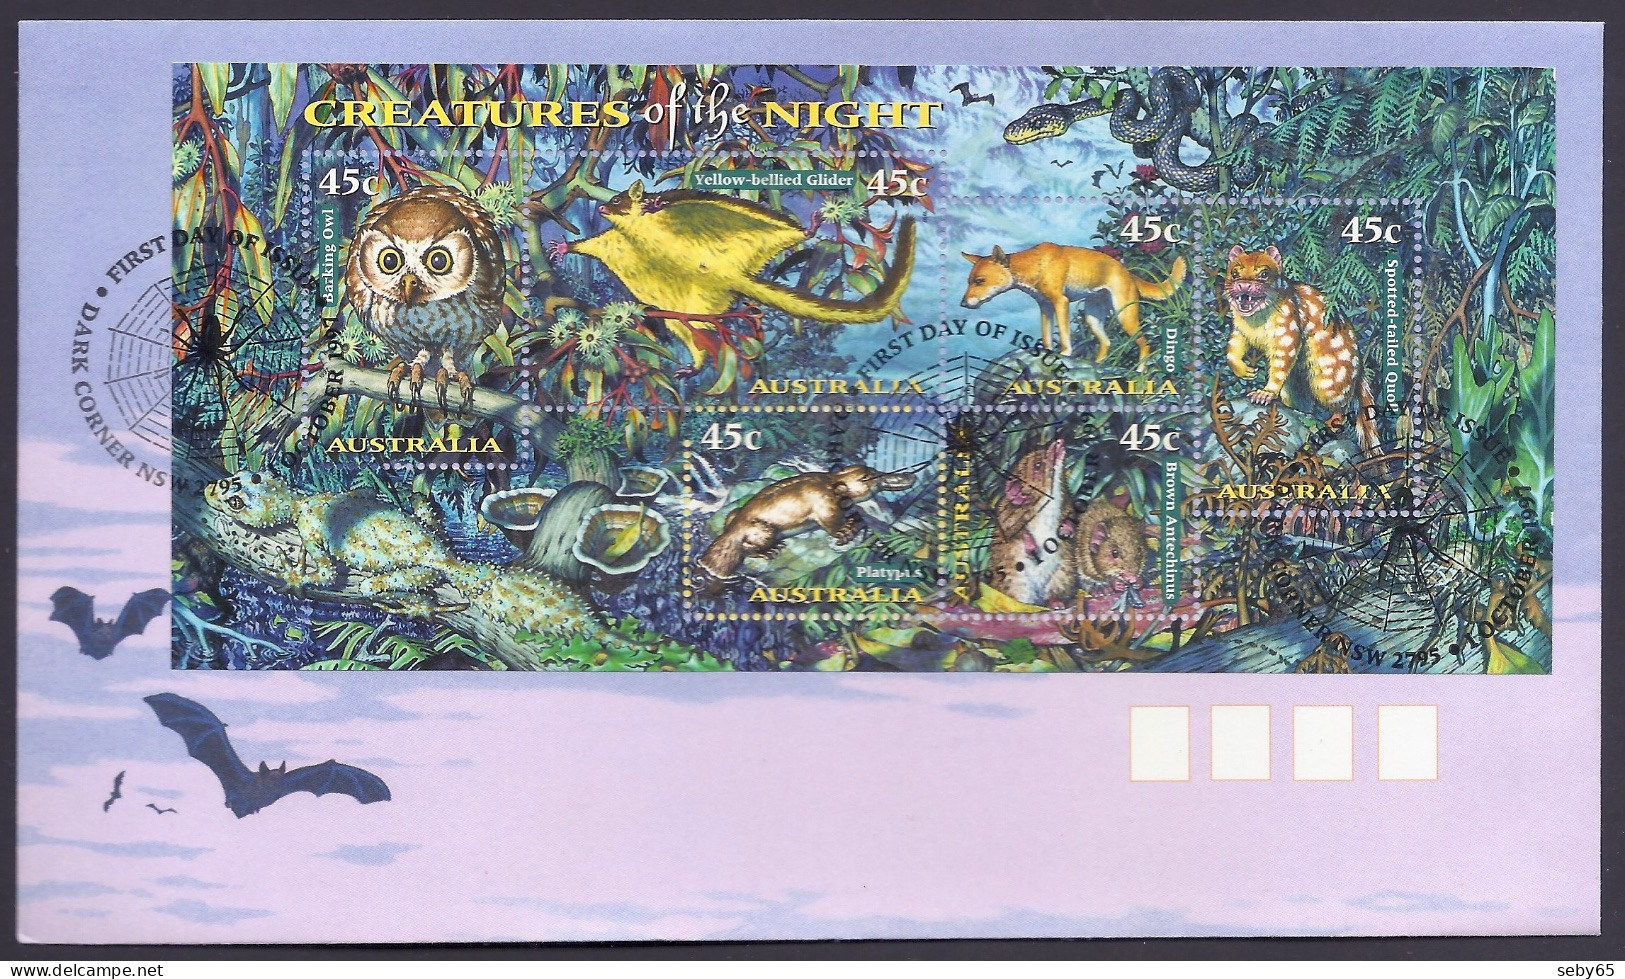 Australia 1997 - Creatures Of The Night, Fauna, Animals, Dingo, Platypus, Barking Owl - Miniature Sheet FDC - Premiers Jours (FDC)